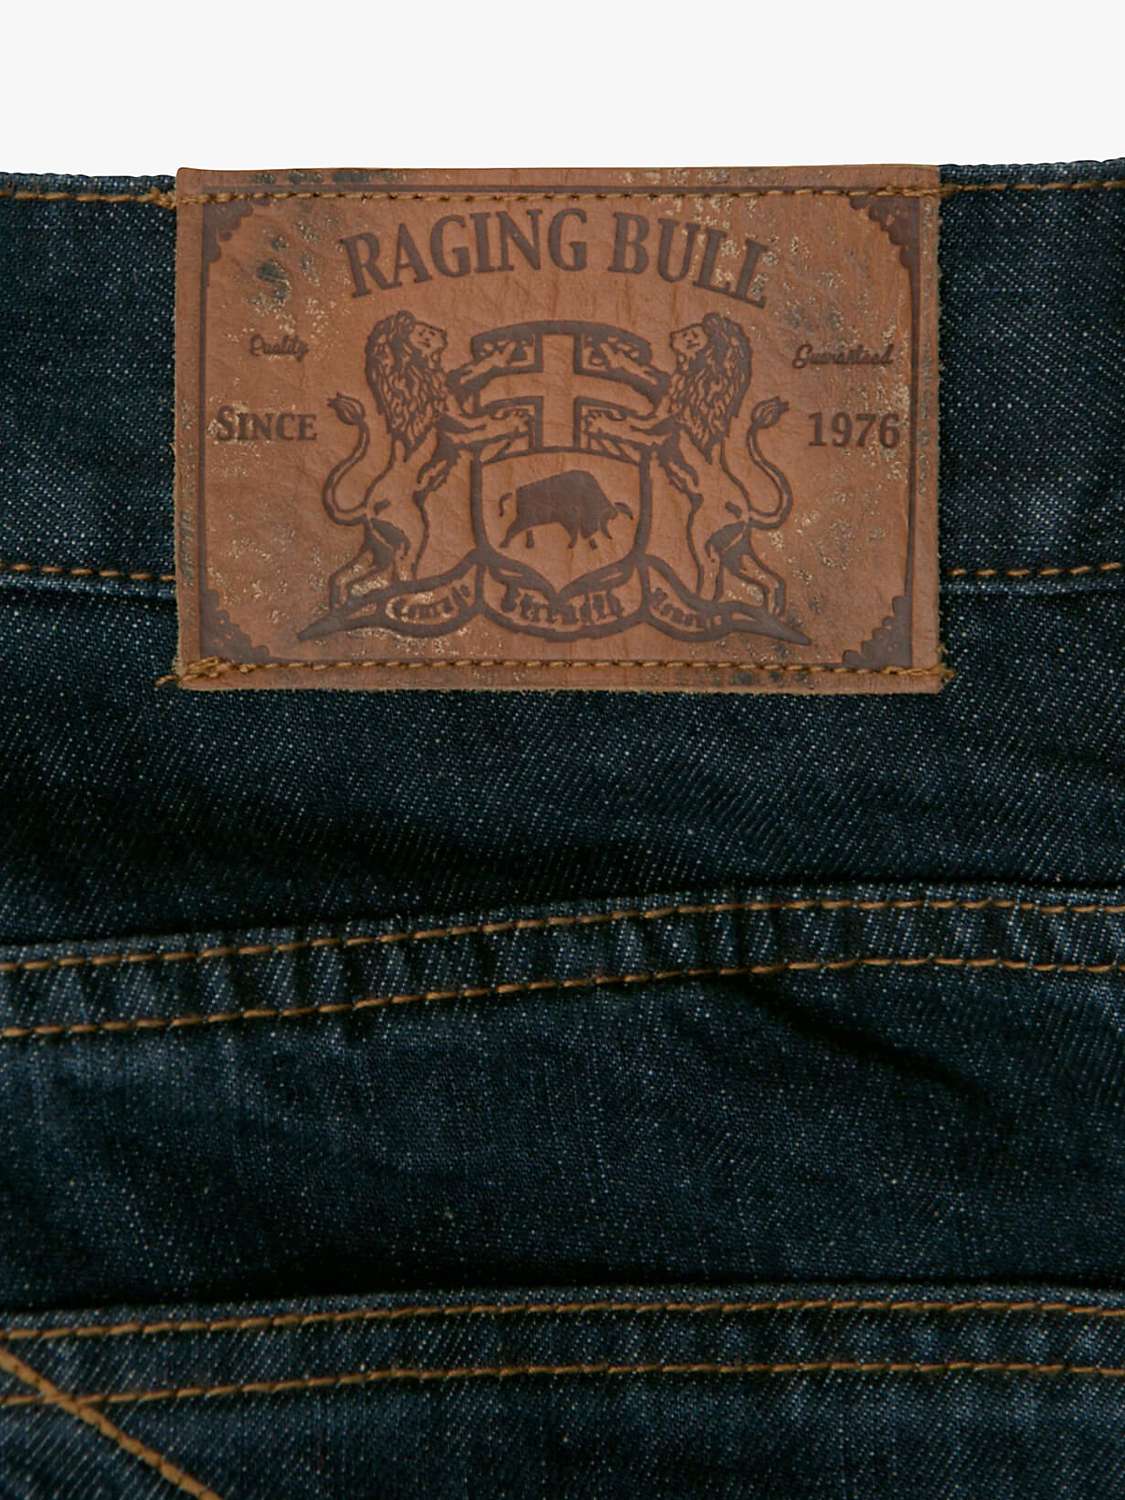 Buy Raging Bull Tapered Jeans Online at johnlewis.com